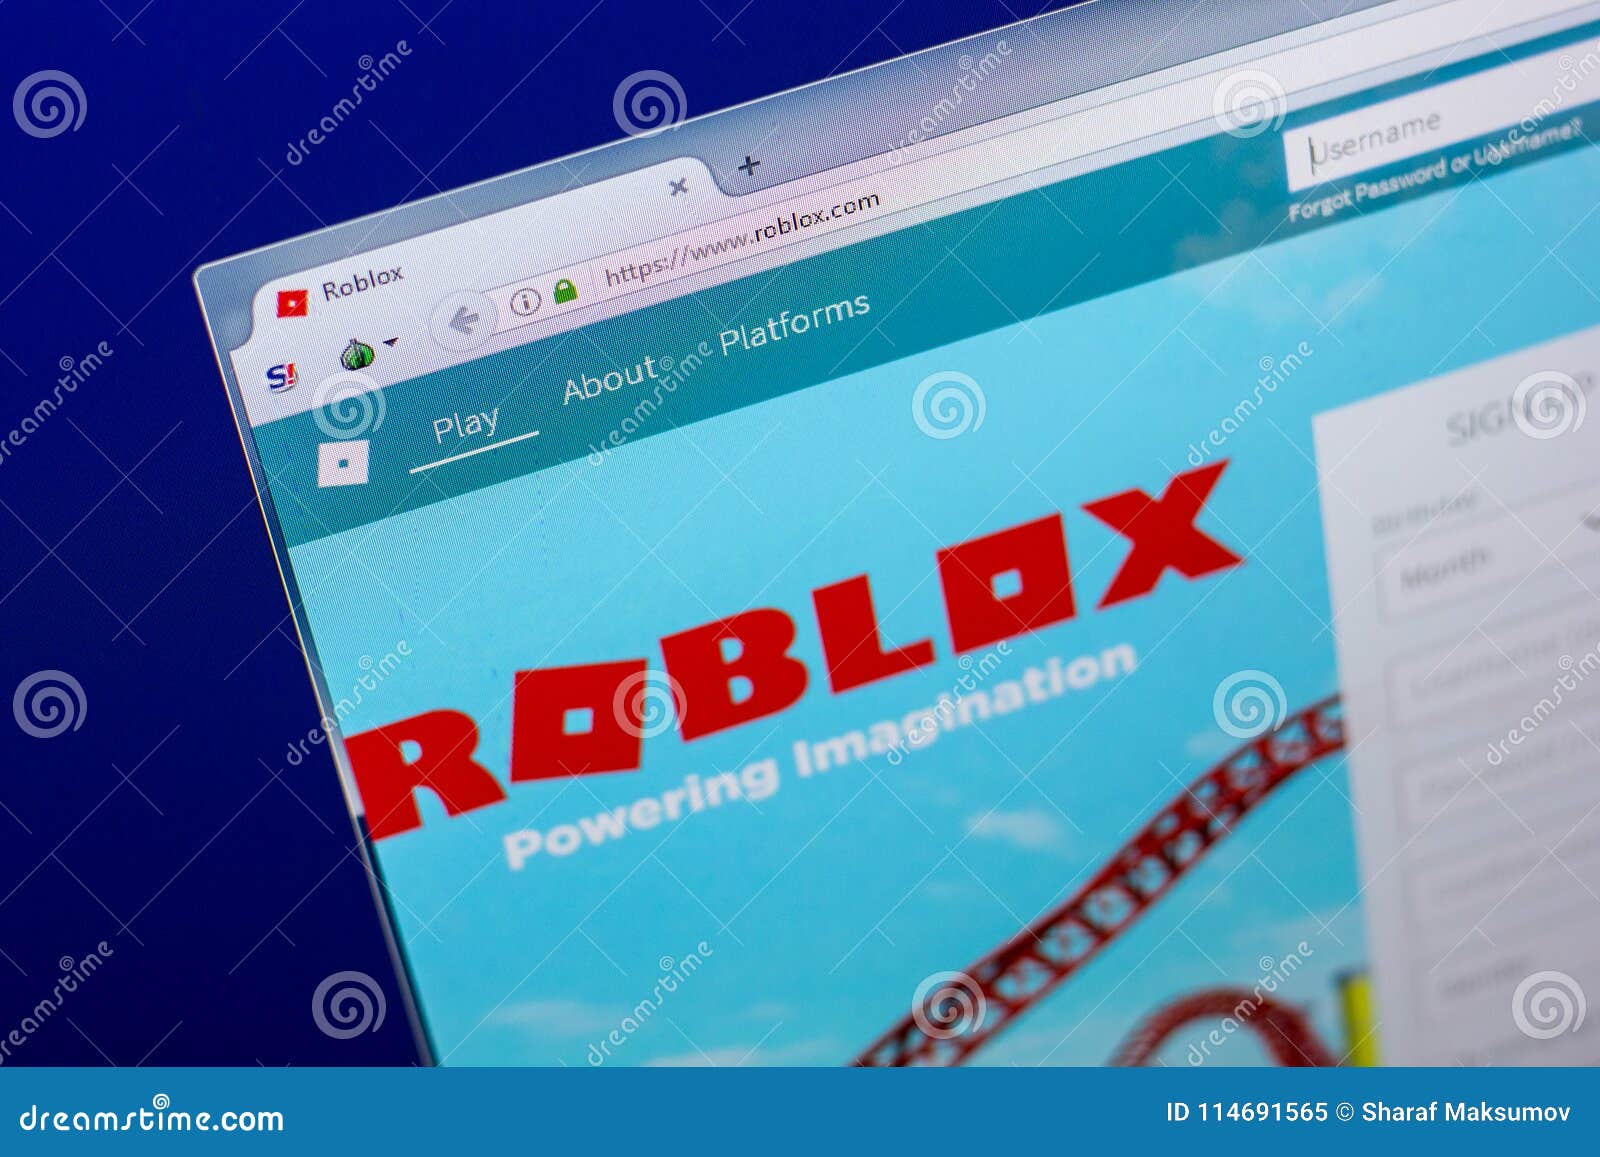 Ryazan Russia April 16 2018 Homepage Of Roblox Website On